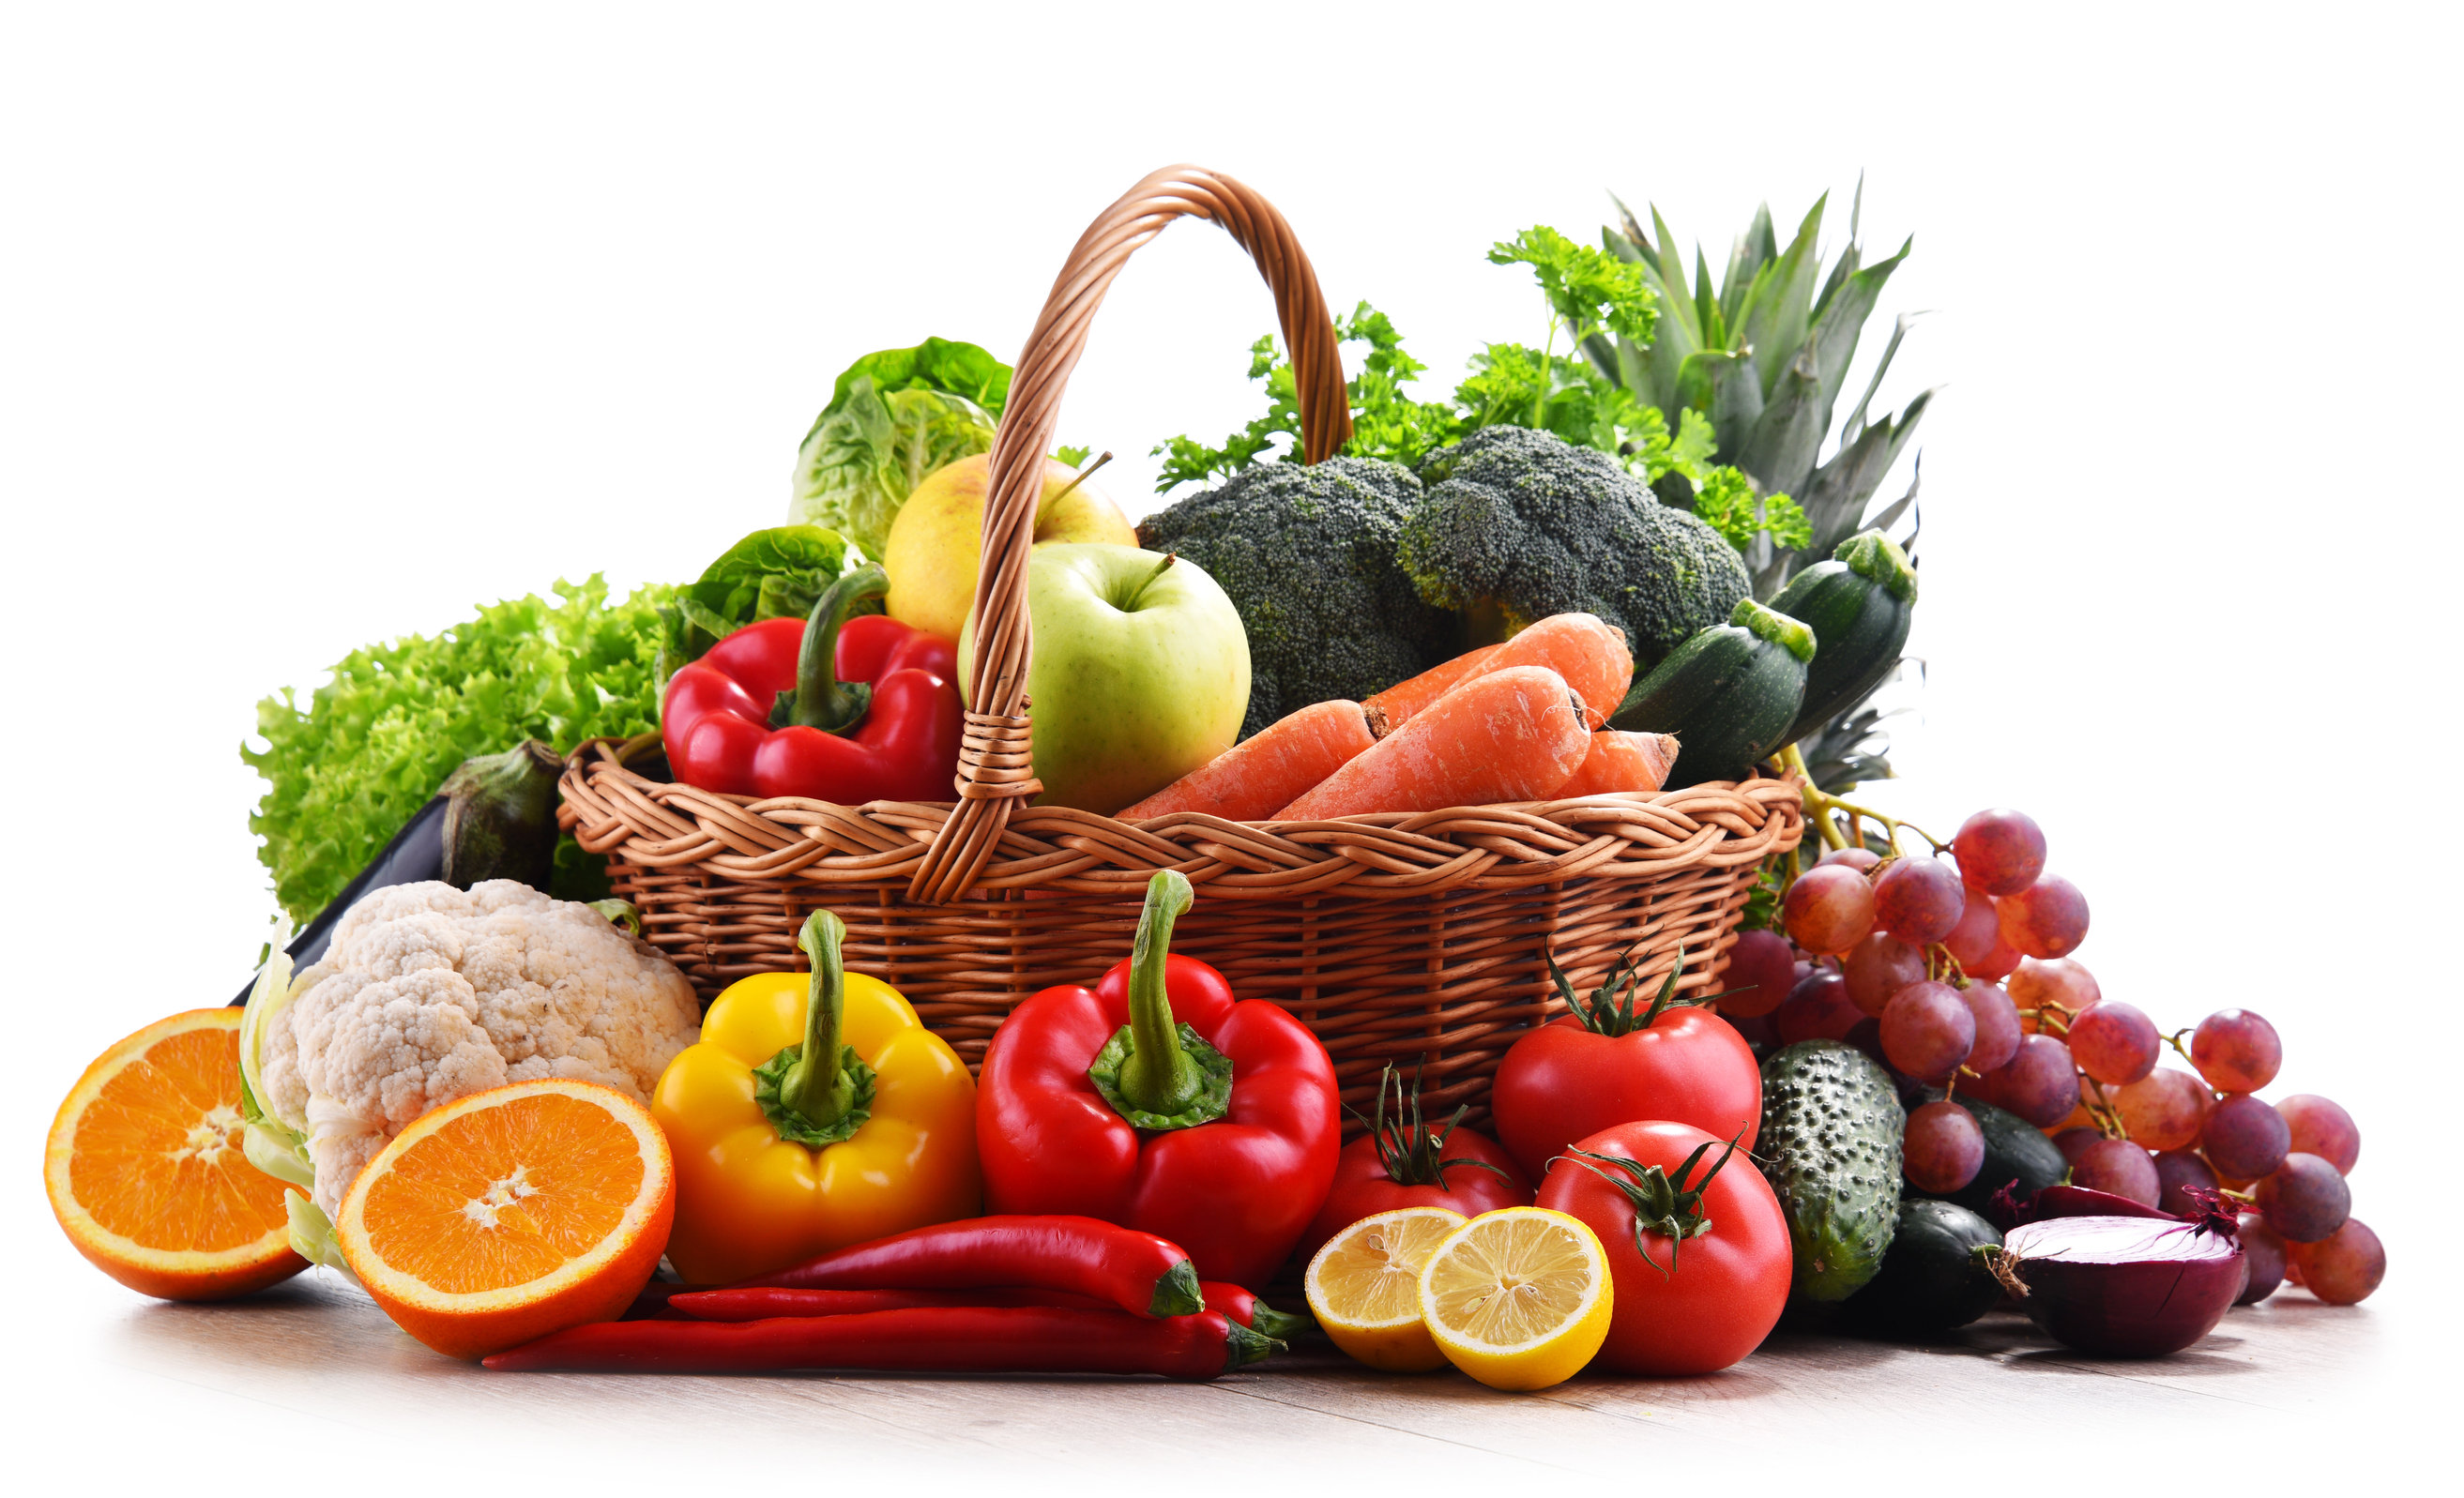 foods high in antioxidants